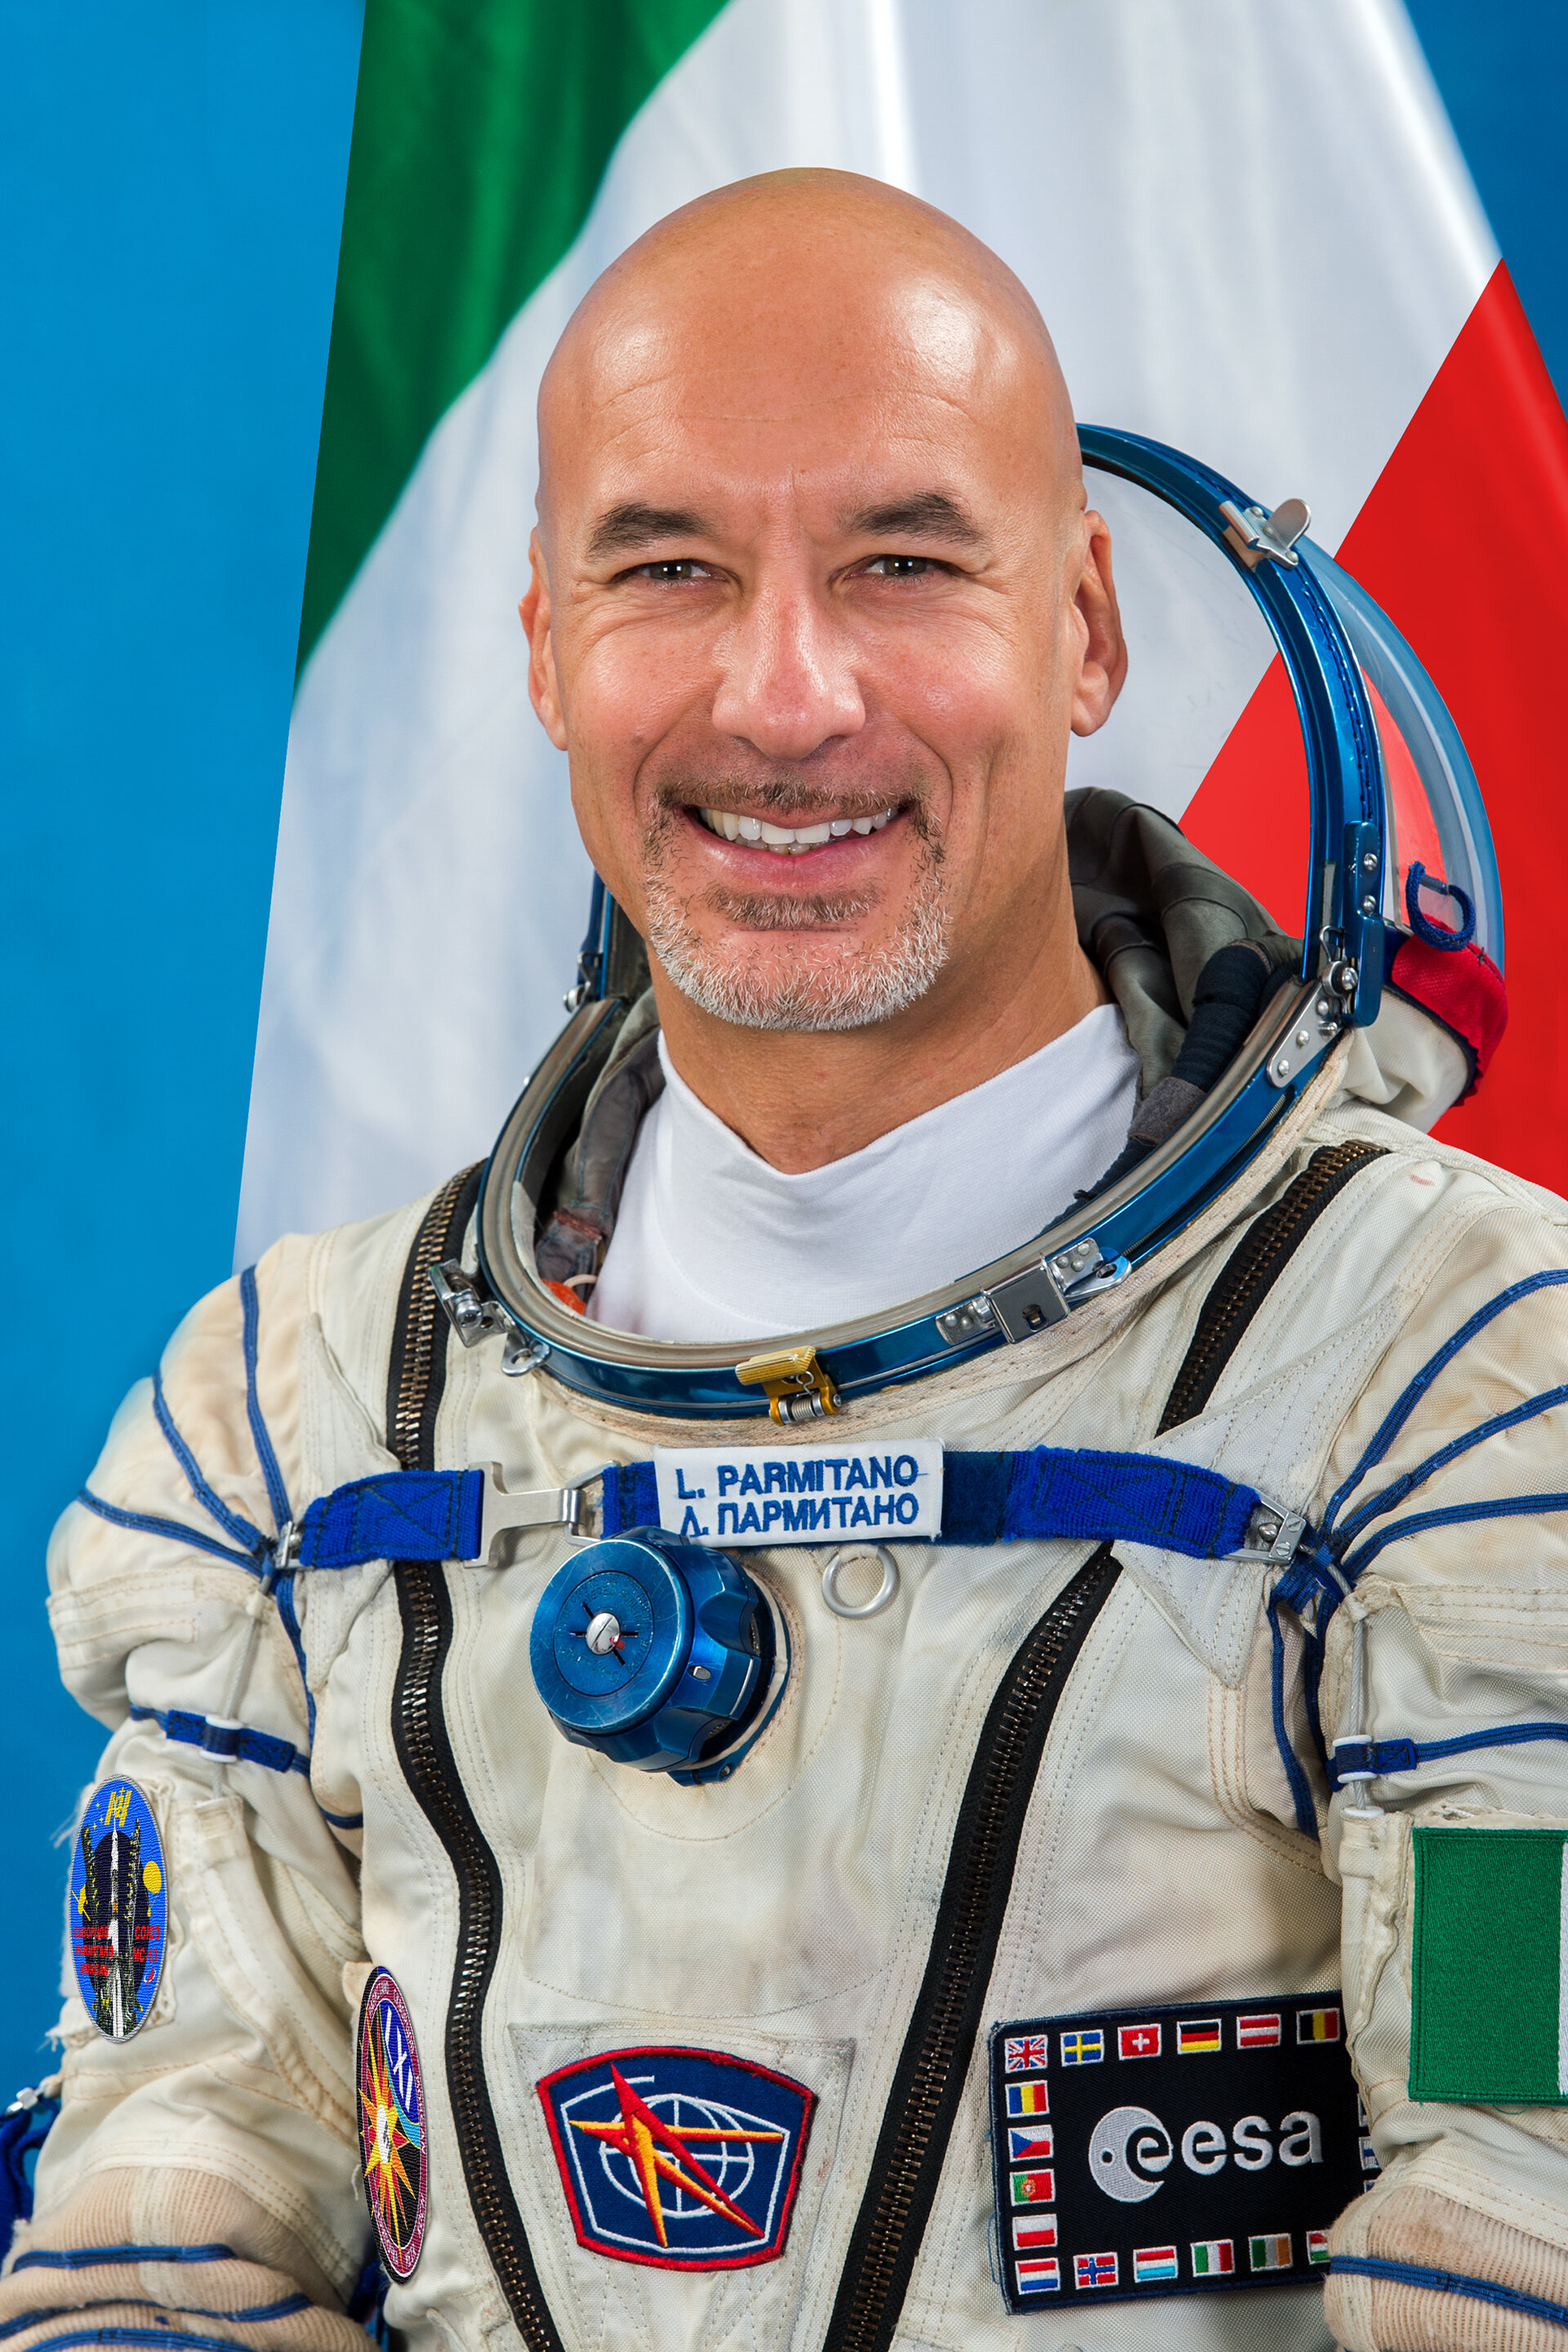 Luca Parmitano – Soyuz portrait